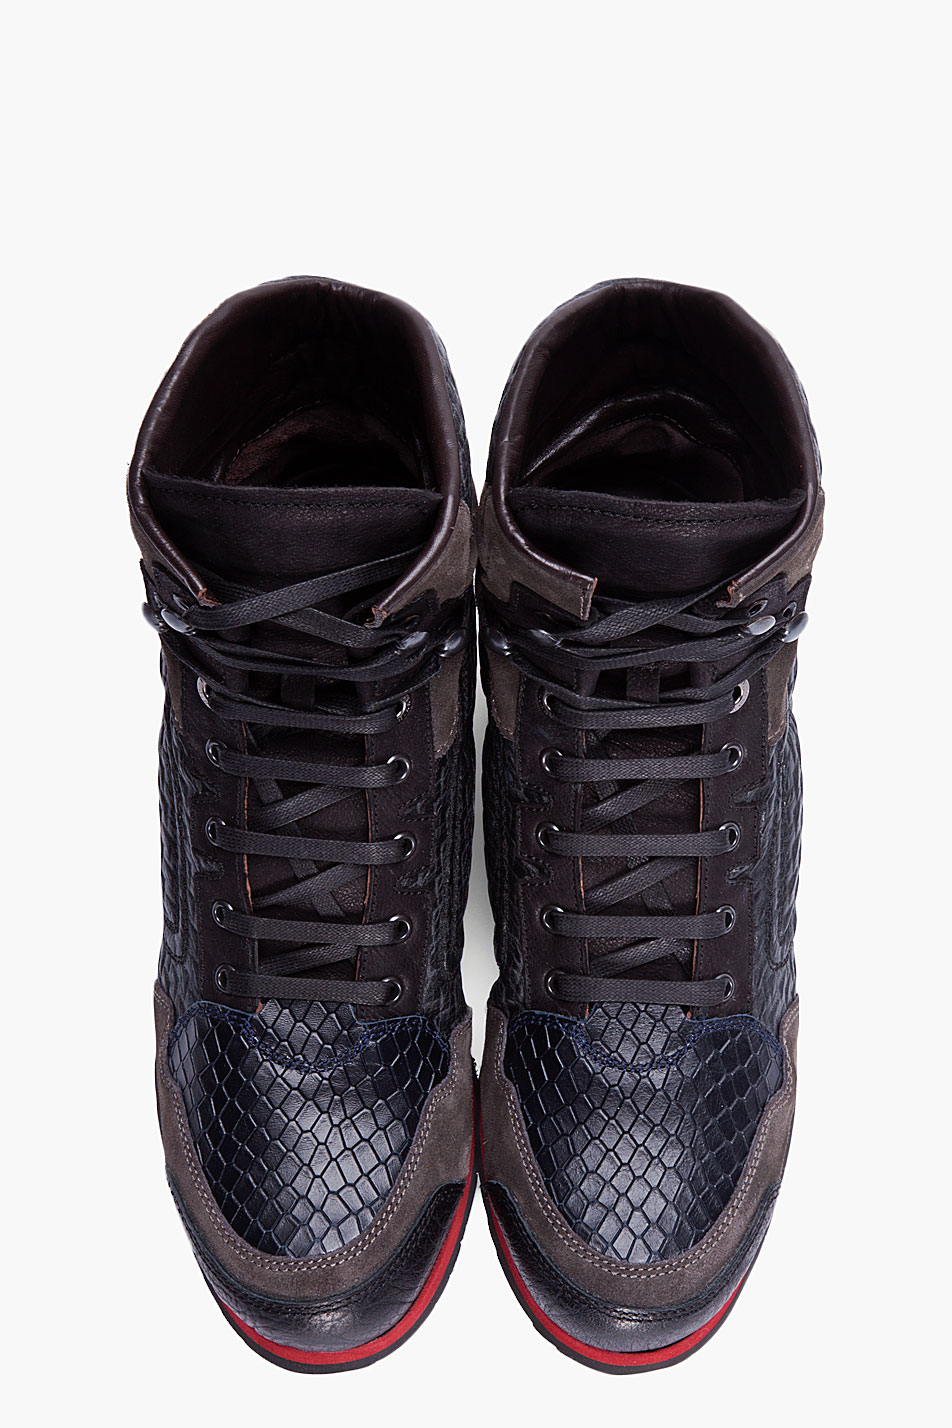 Lanvin Black Snakeskin Hightop Tennis Shoes for Men - Lyst